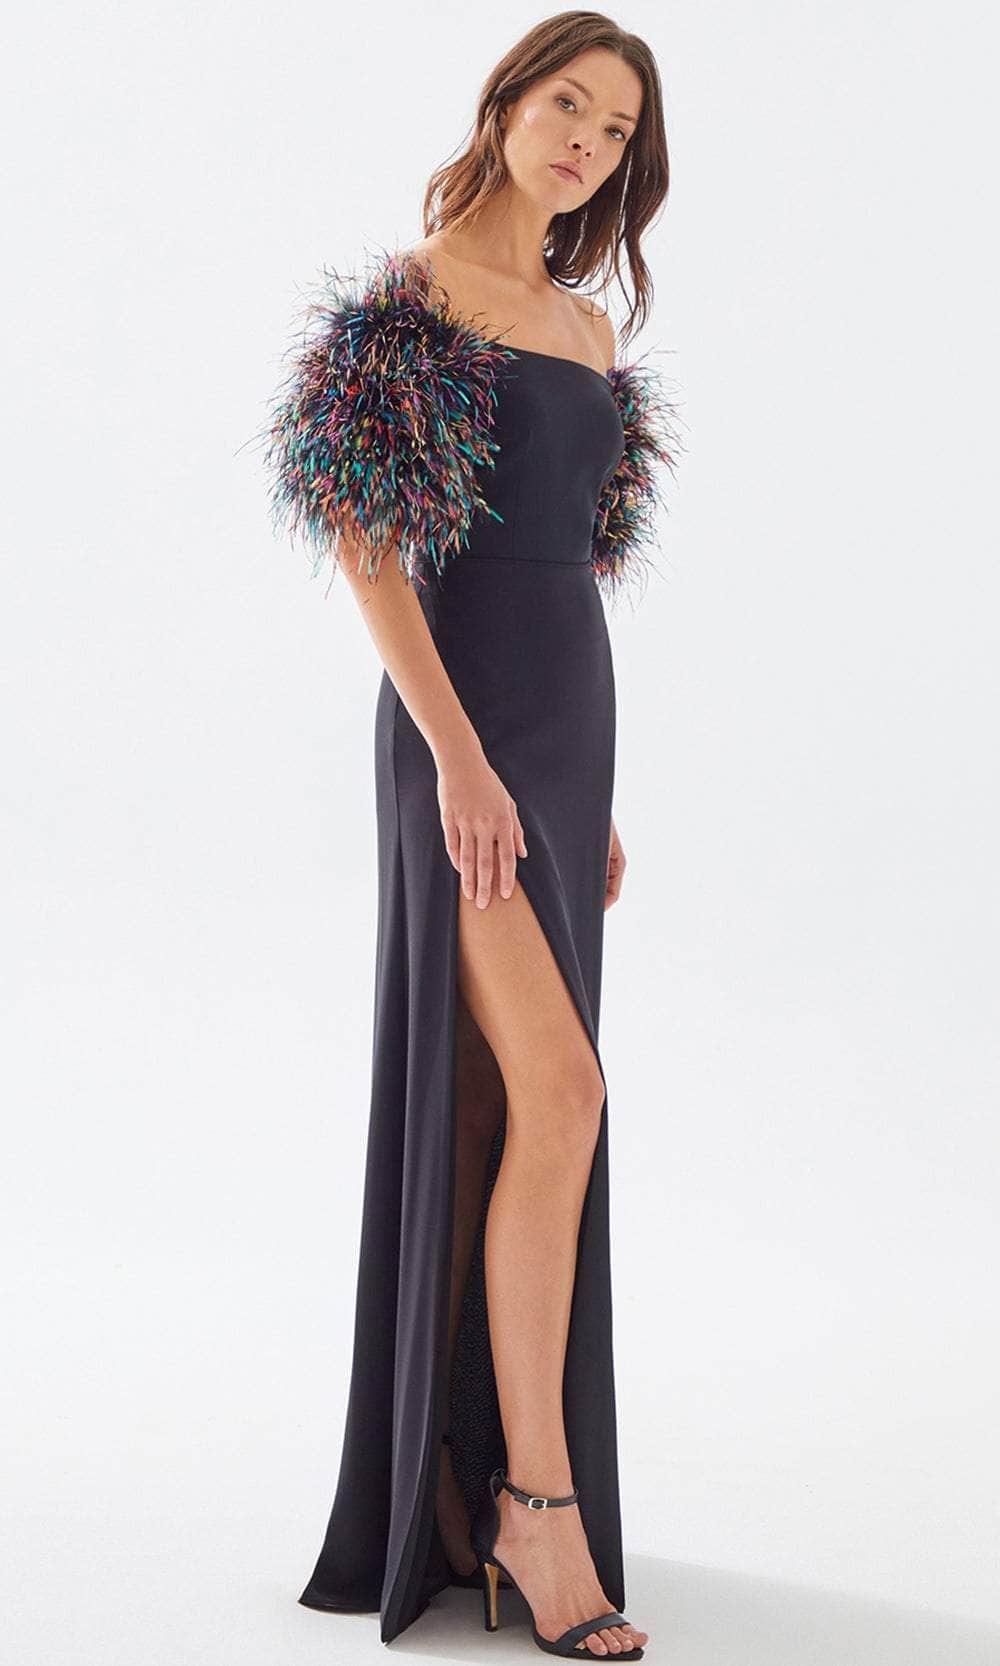 Tarik Ediz 52033 - Feathered A-Line Prom Dress In Black